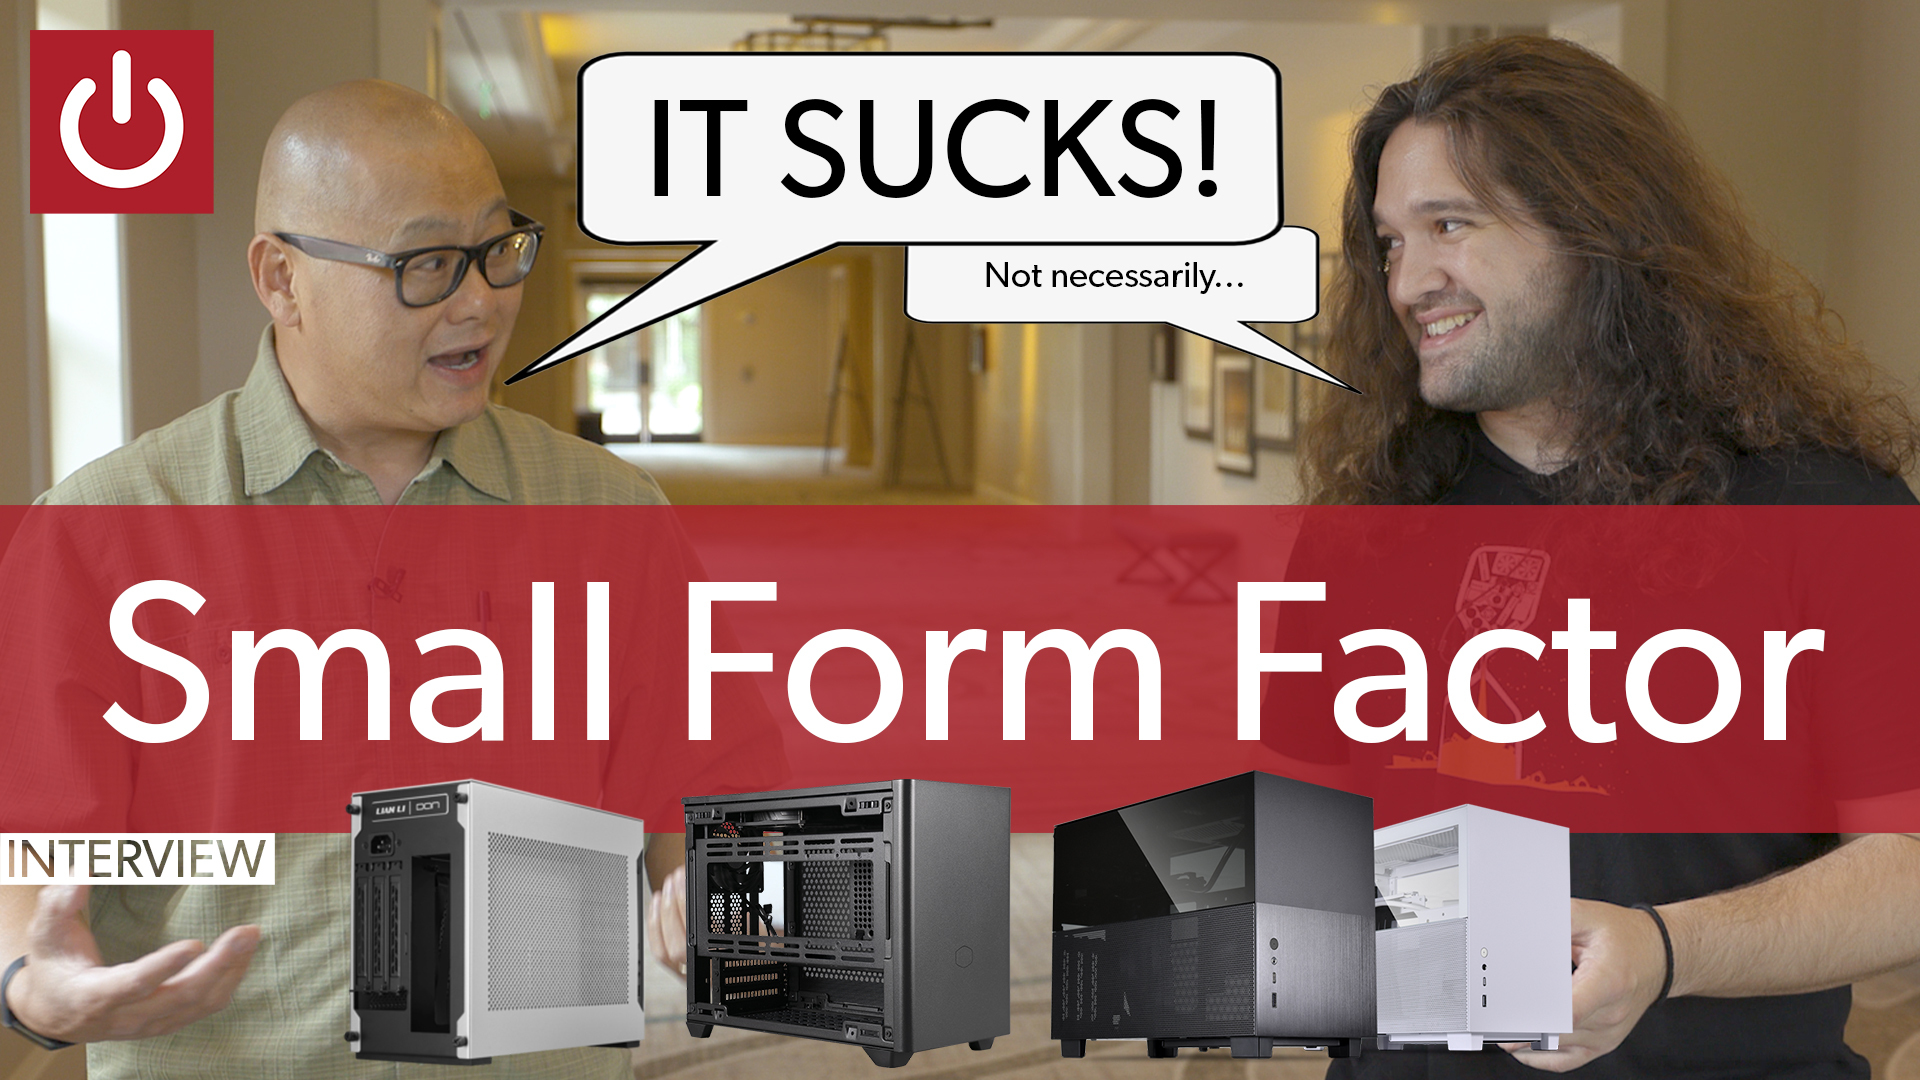 Small Form Factor: It Sucks! Gordon and Steve